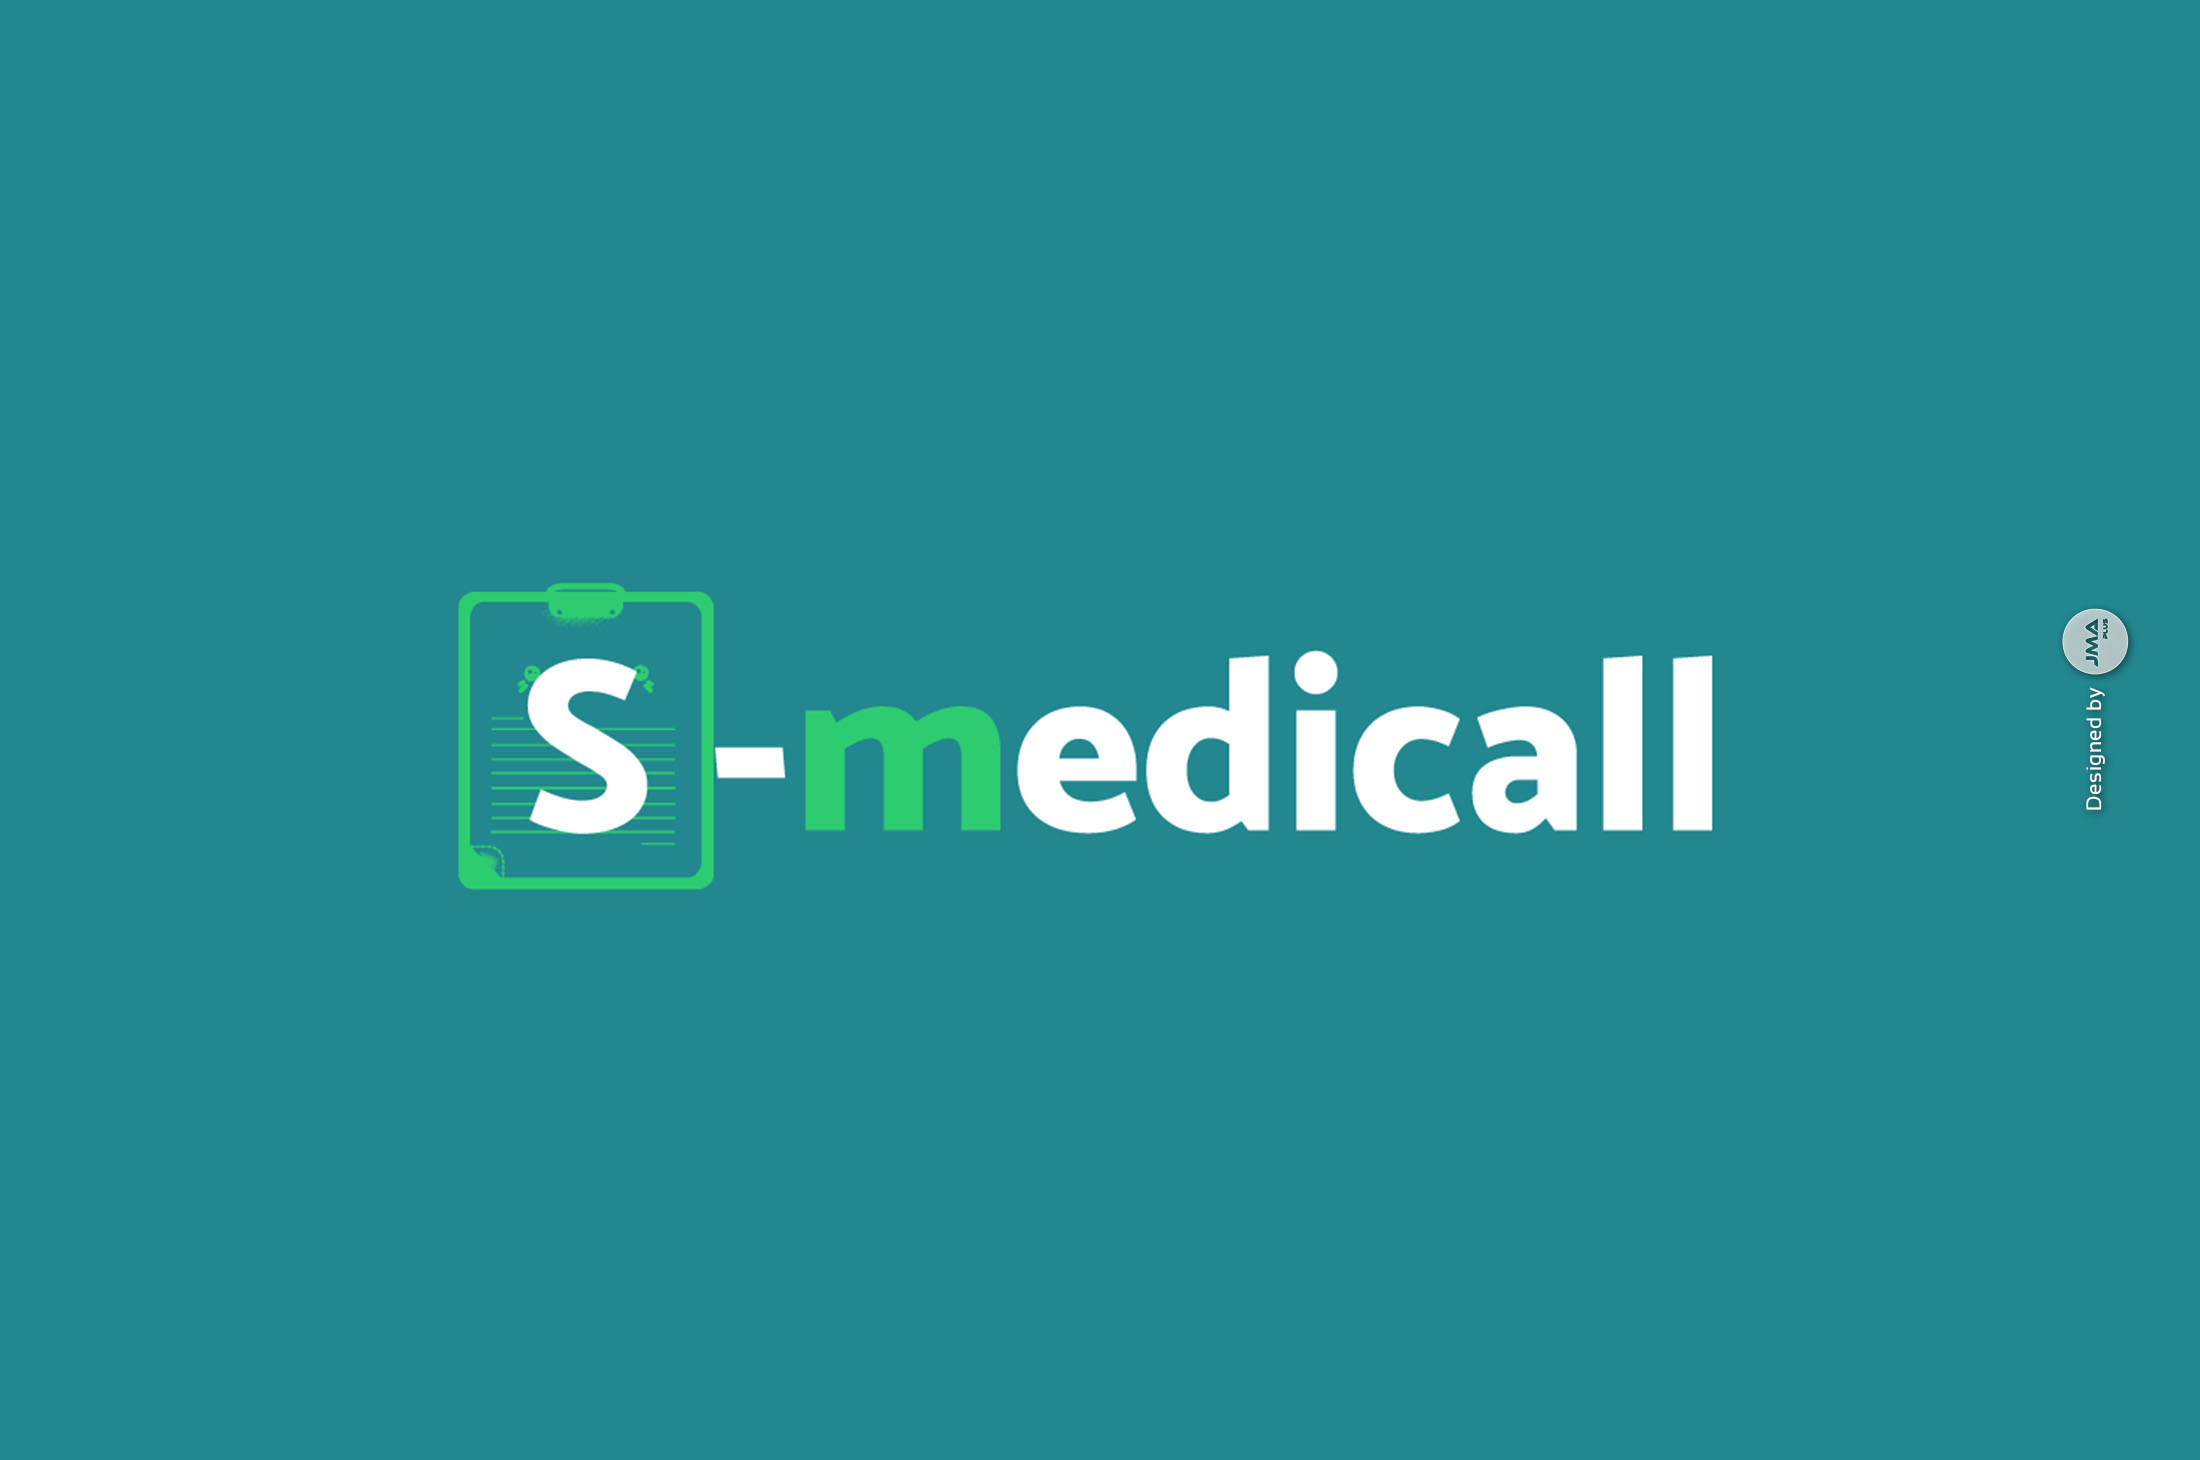 S-medicall 2